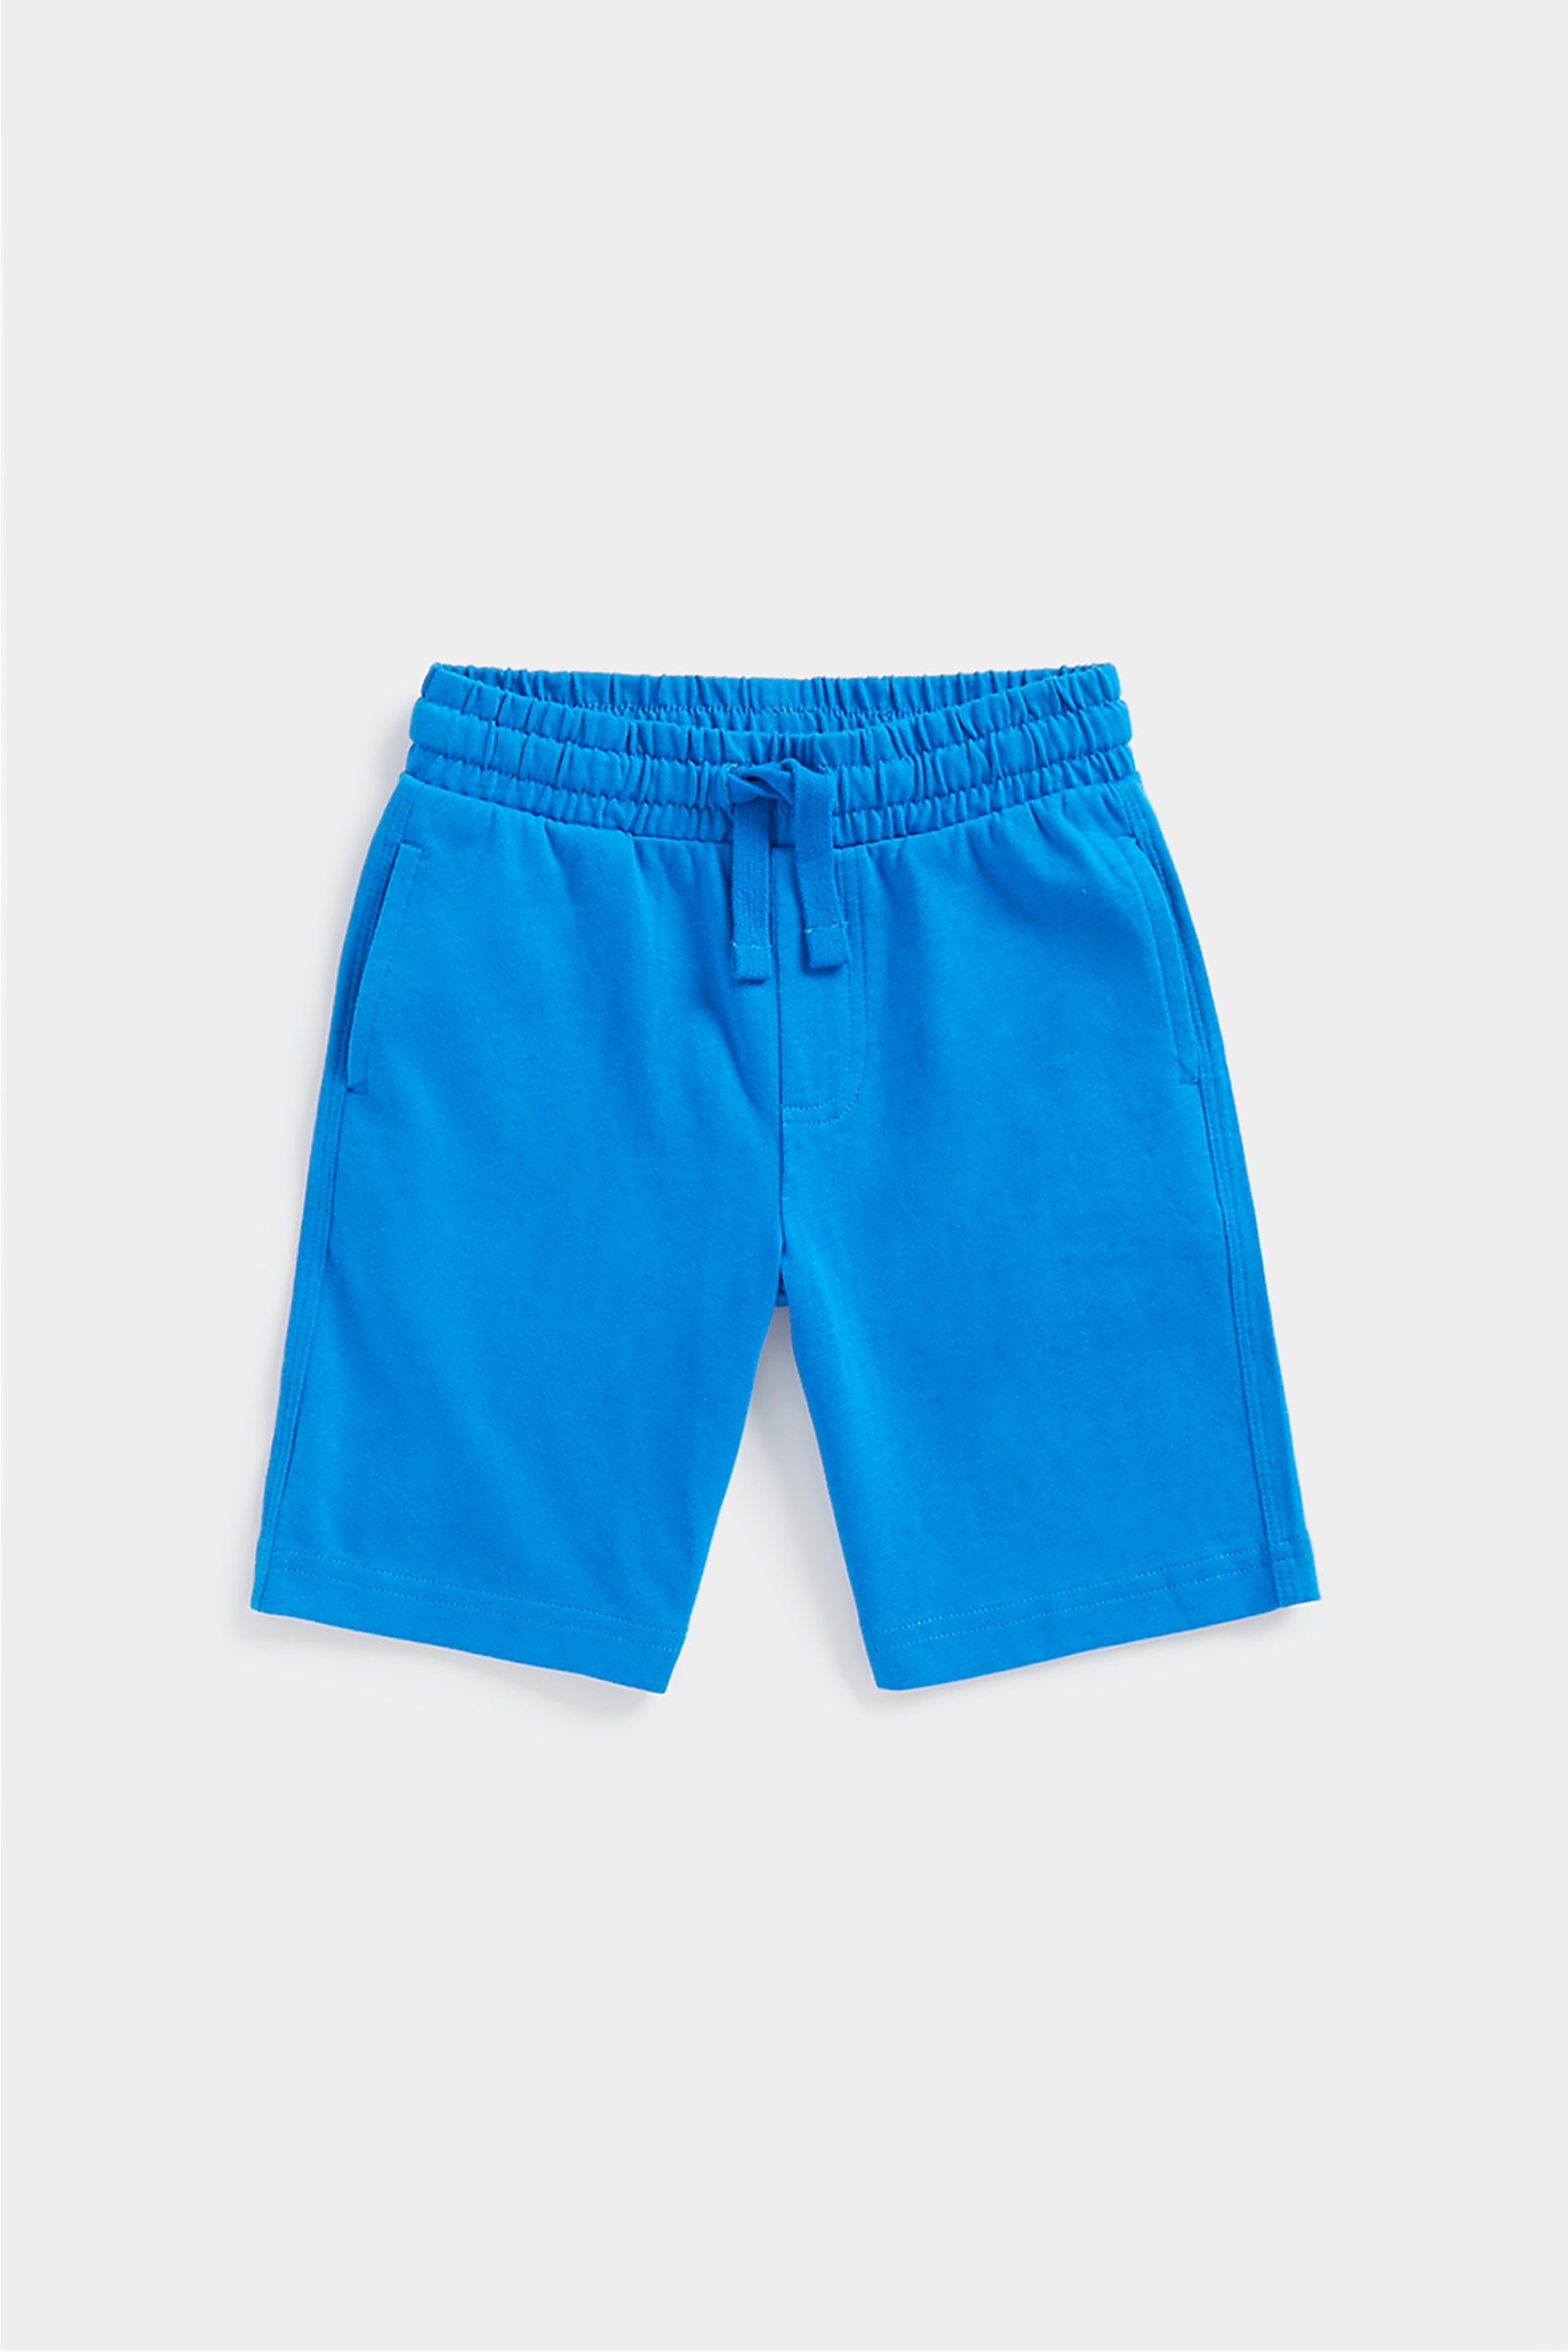 Boys Short Blue Jersey Shorts -Blue